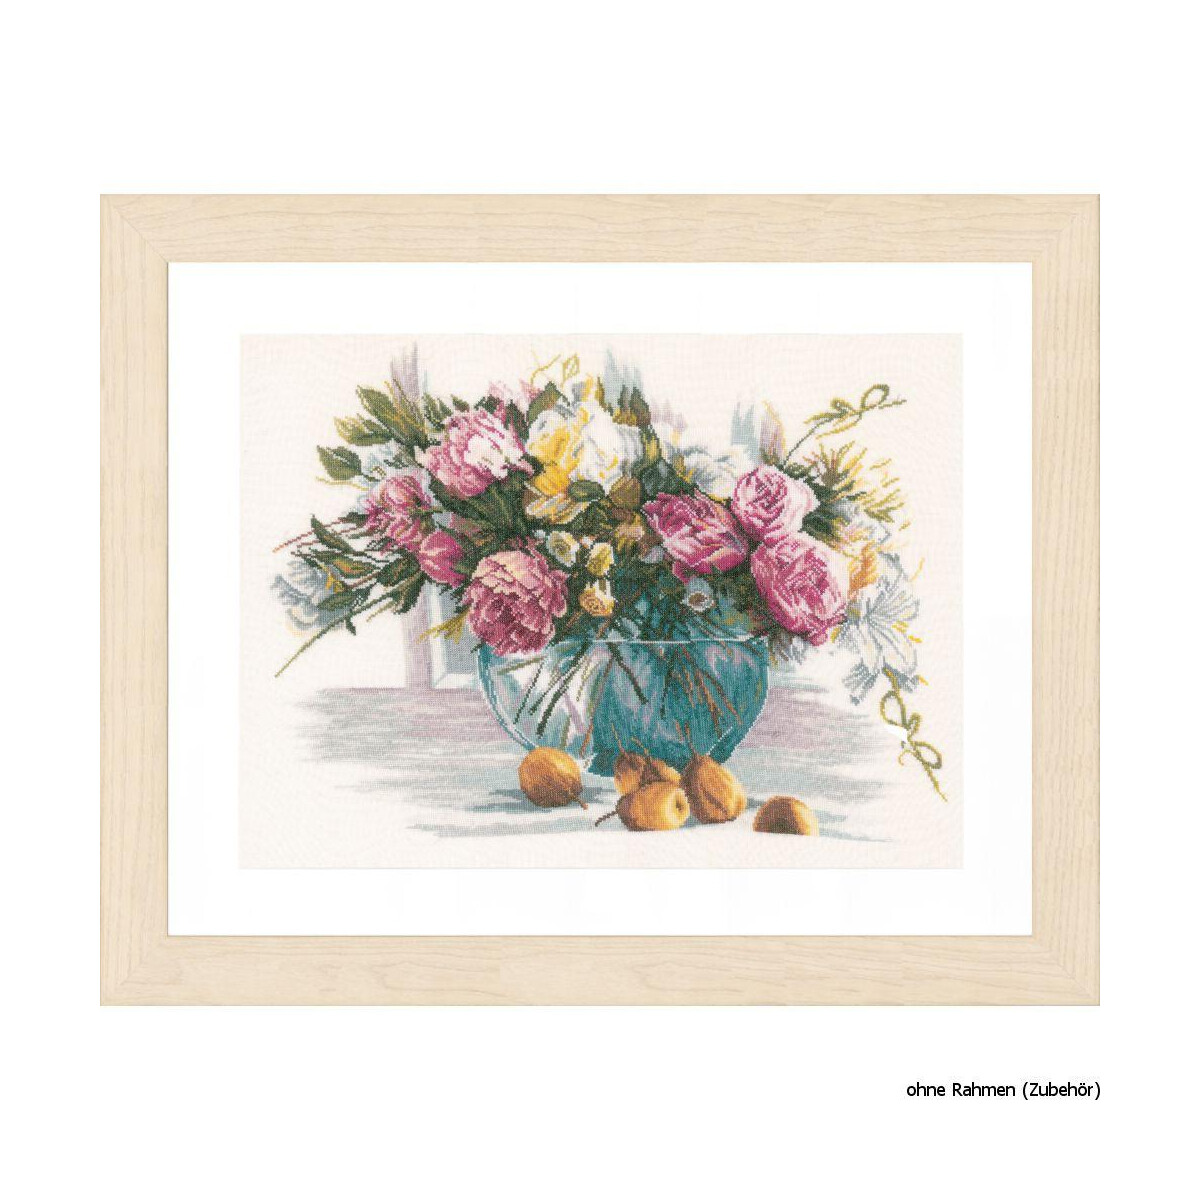 Framed artwork showing a colorful flower arrangement in a...